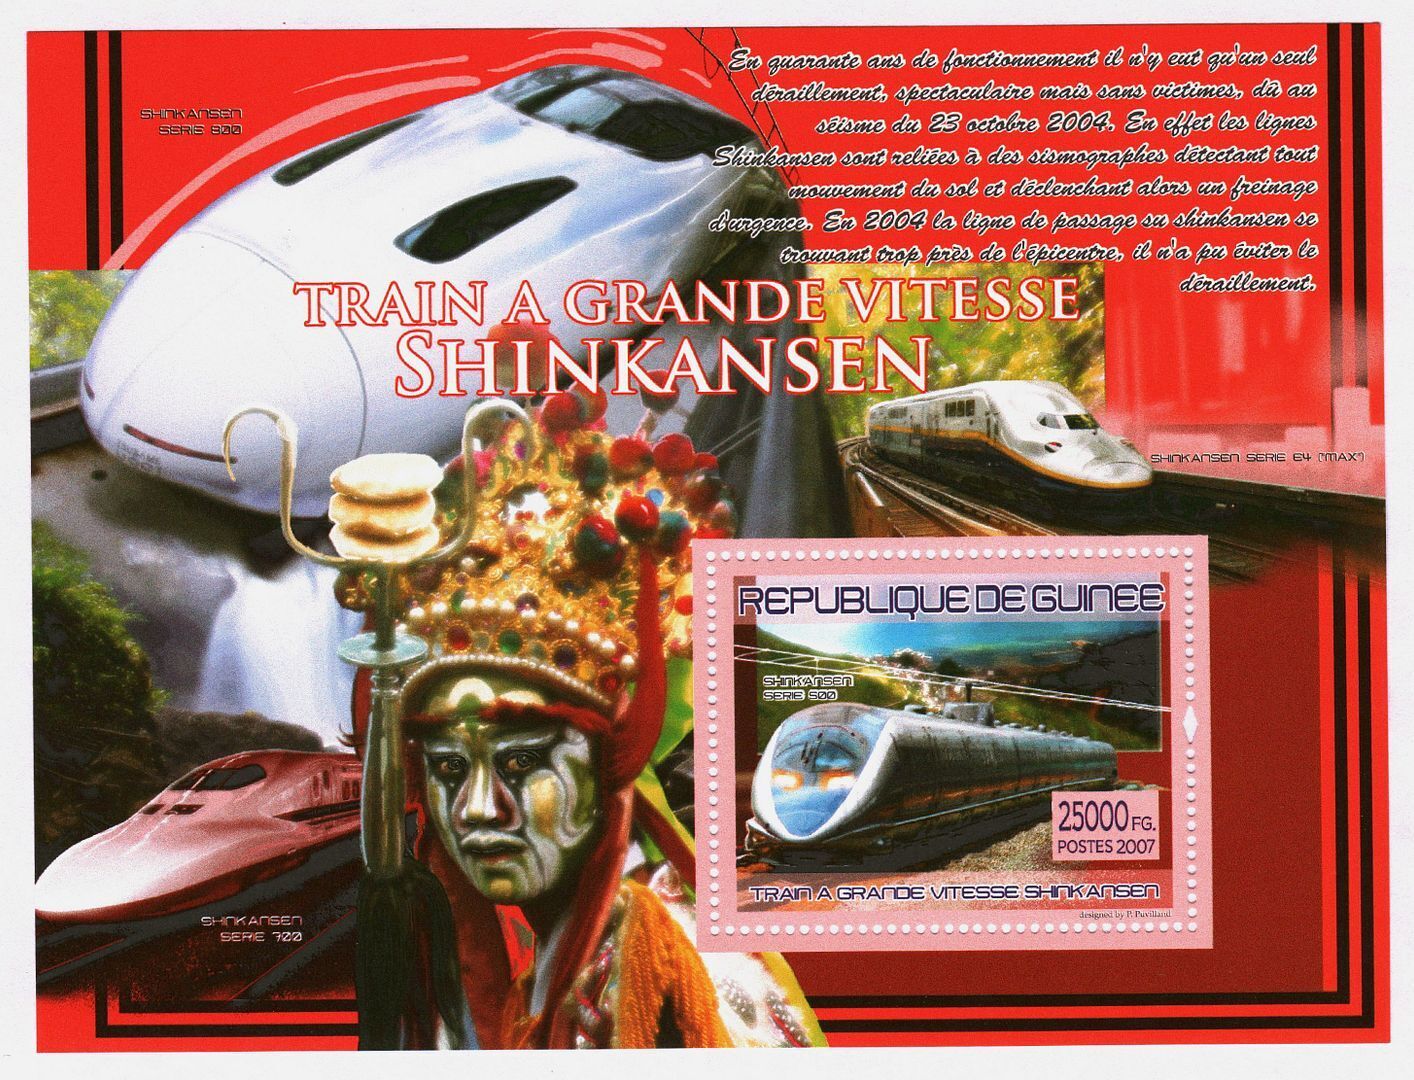 Guinea 2007 Stamps Sheet Shinkansen High Speed Train Mnh #14437